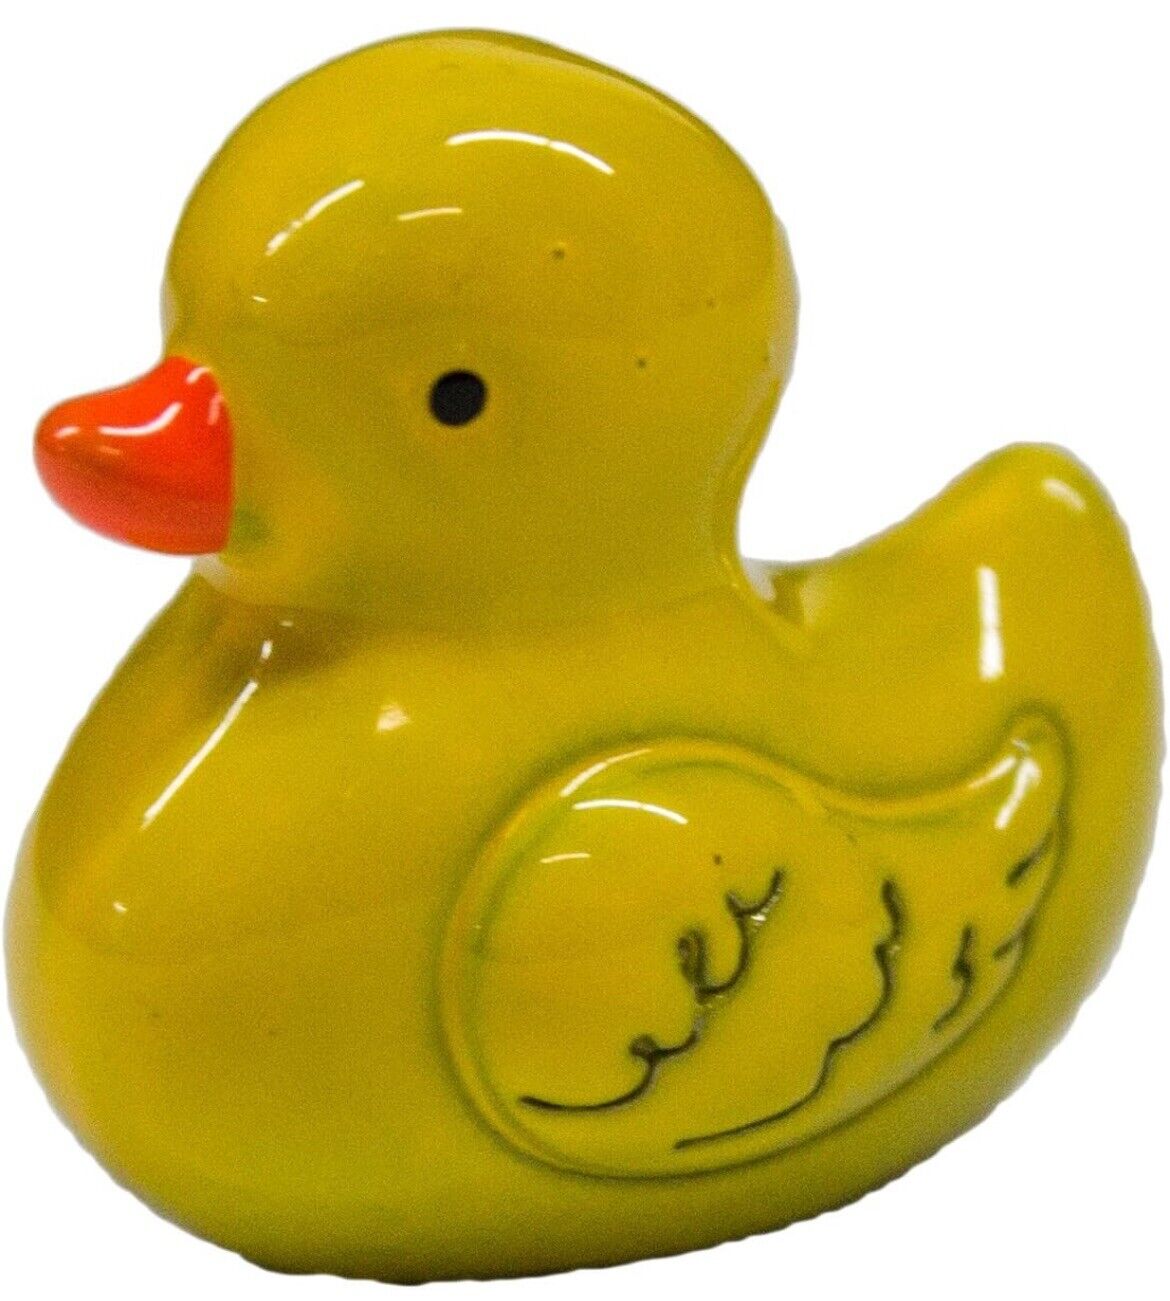 LUCKY DUCK Rubber Ducky CHARM Pocket Mini Figurine Good Luck Ganz Die Cast Metal